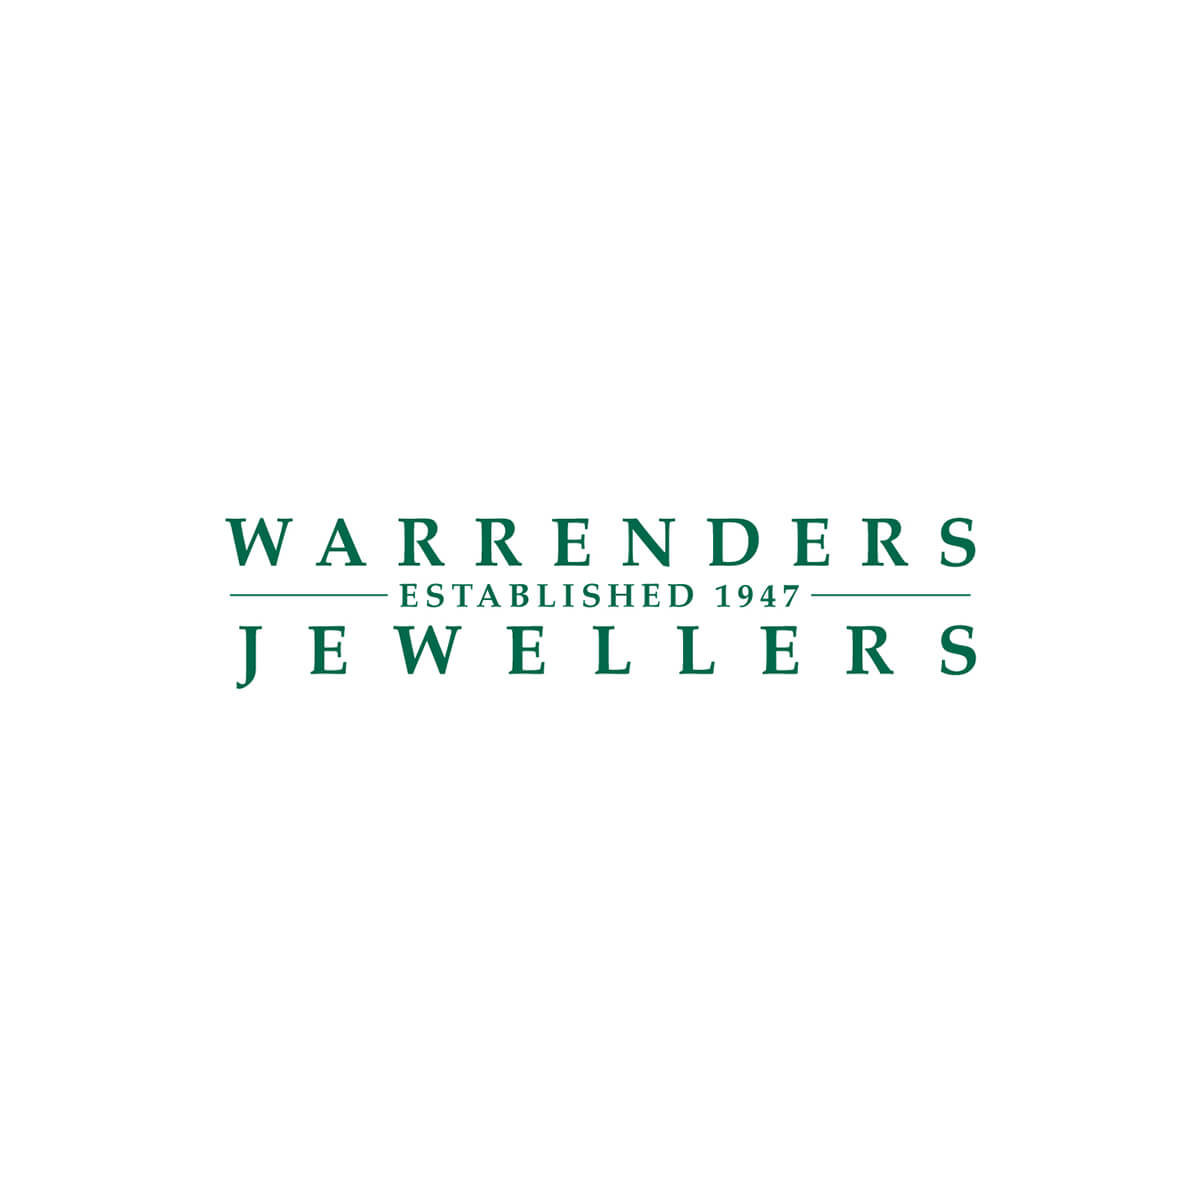 Warrenders Jewellers Logo